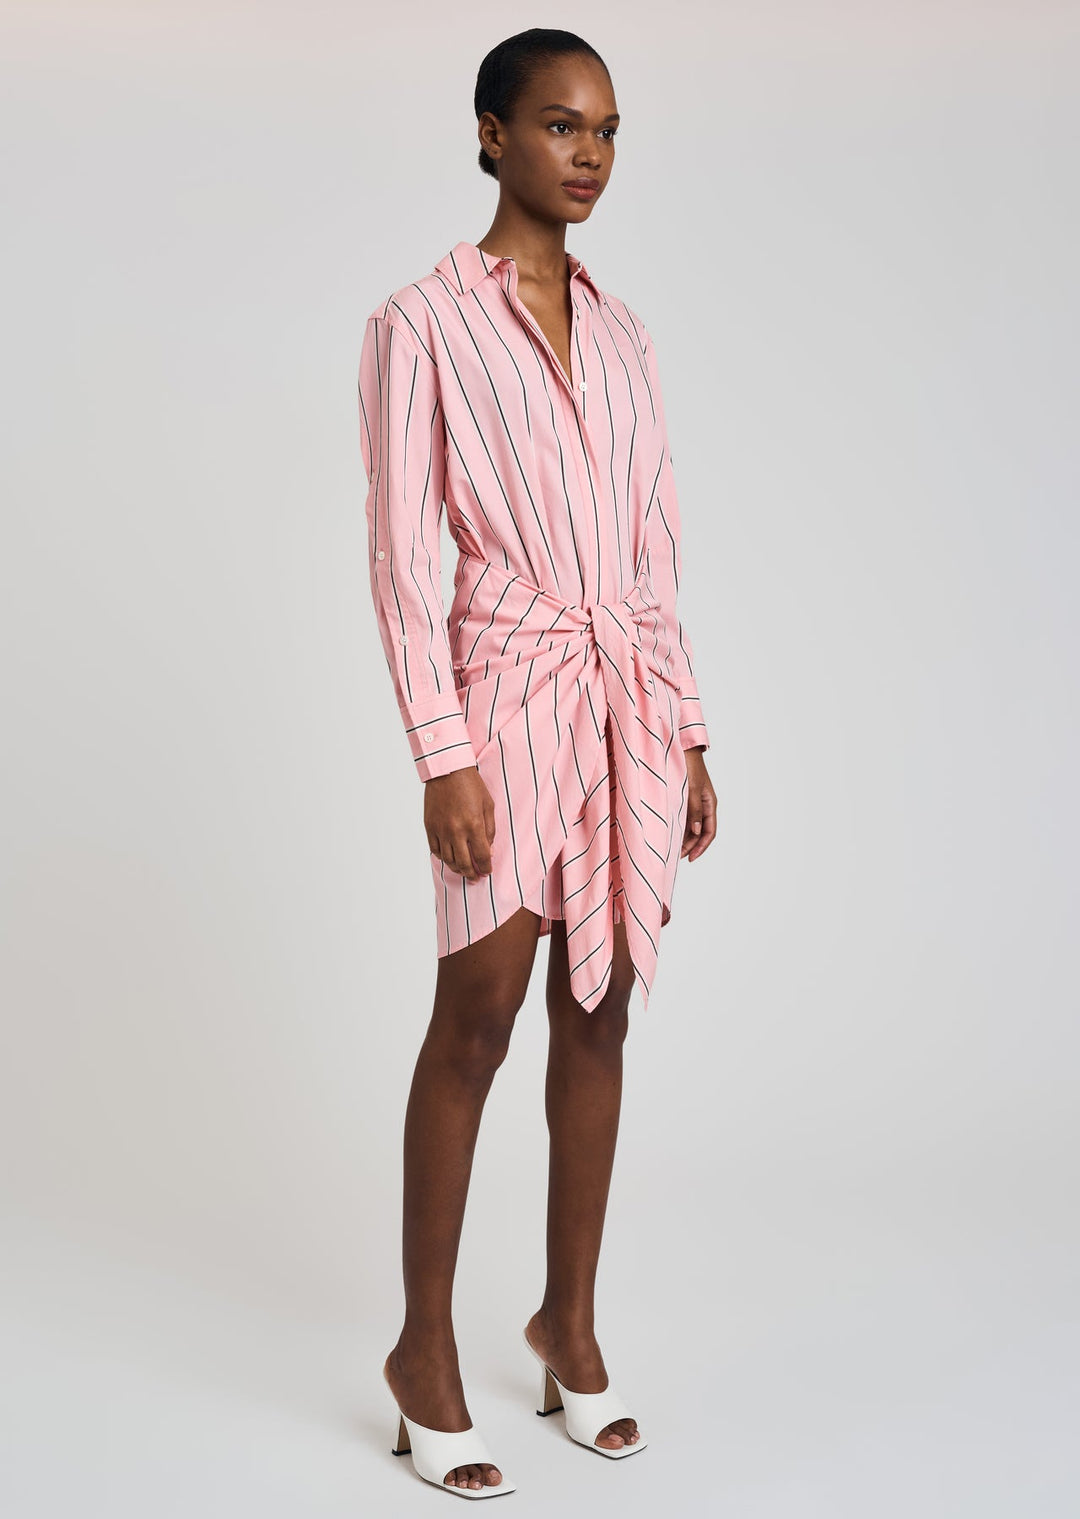 Derek Lam 10 Crosby - Charlotte Tie Waist Shirt Dress in Pink Multi